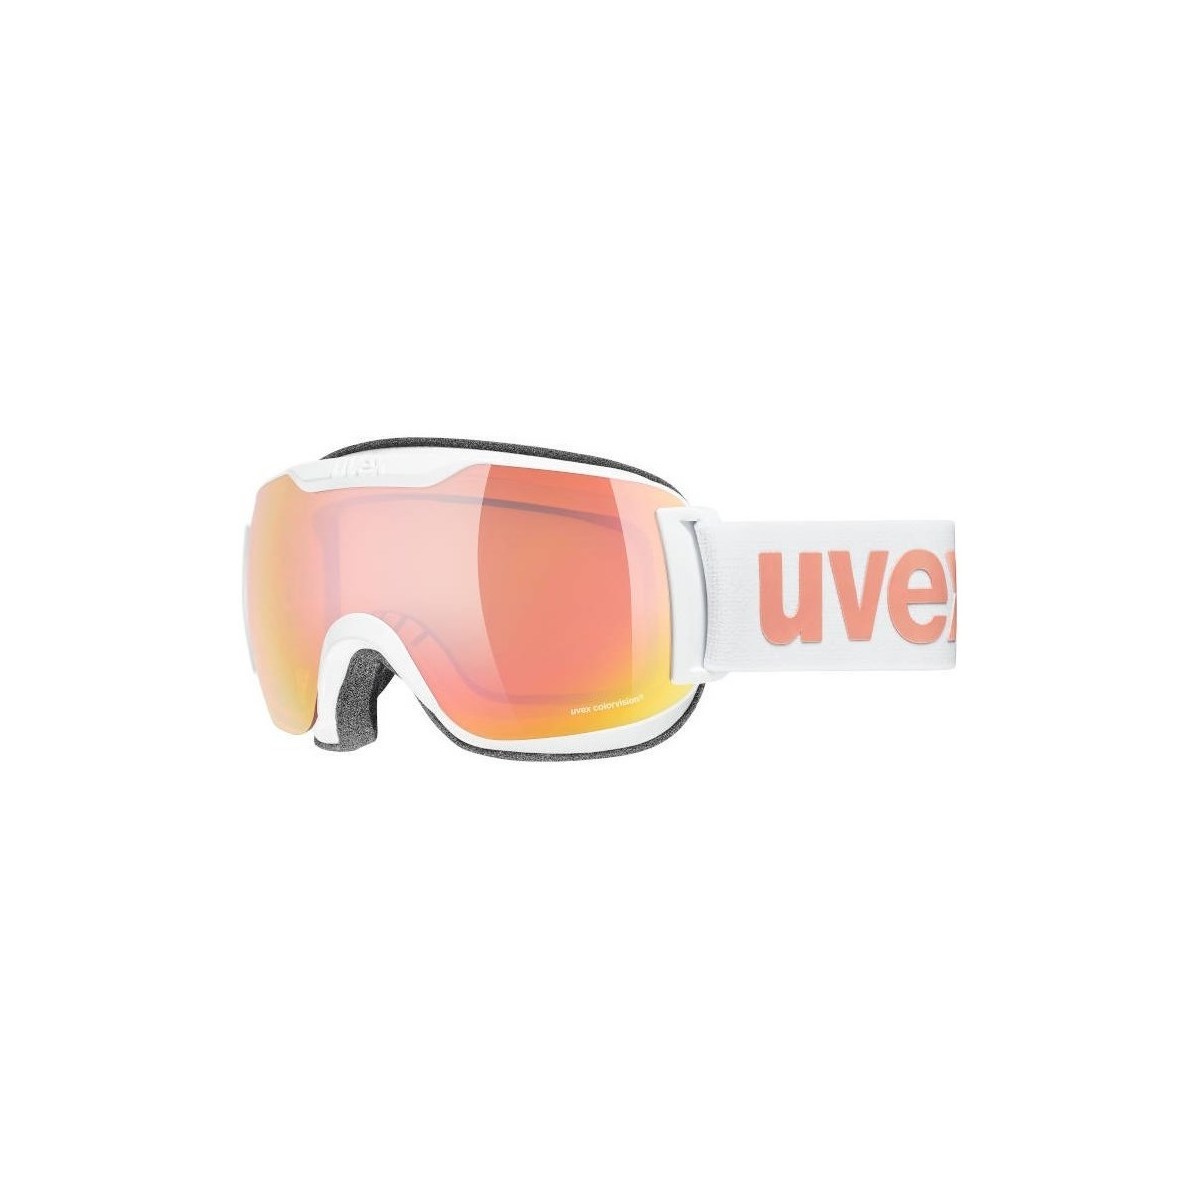 Accessories Sportstilbehør Uvex Downhill 2000 S CV 1030 2021 Hvid, Pink